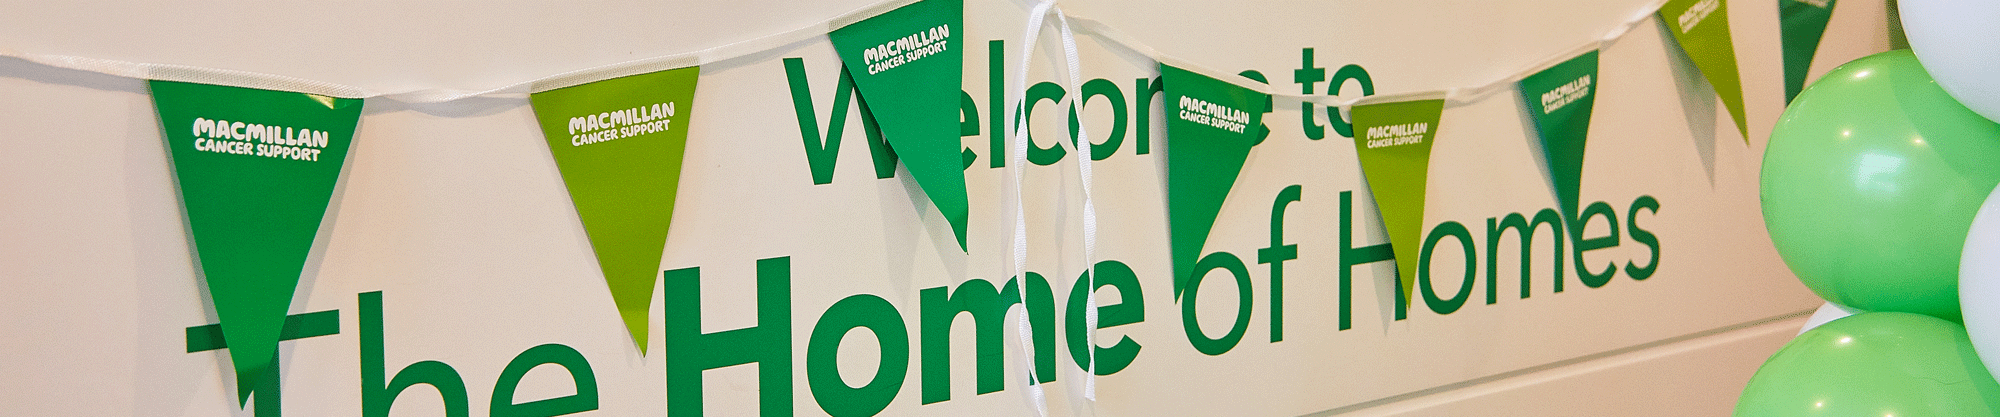 Dunelm's new charity partnership - Macmillan Cancer Support